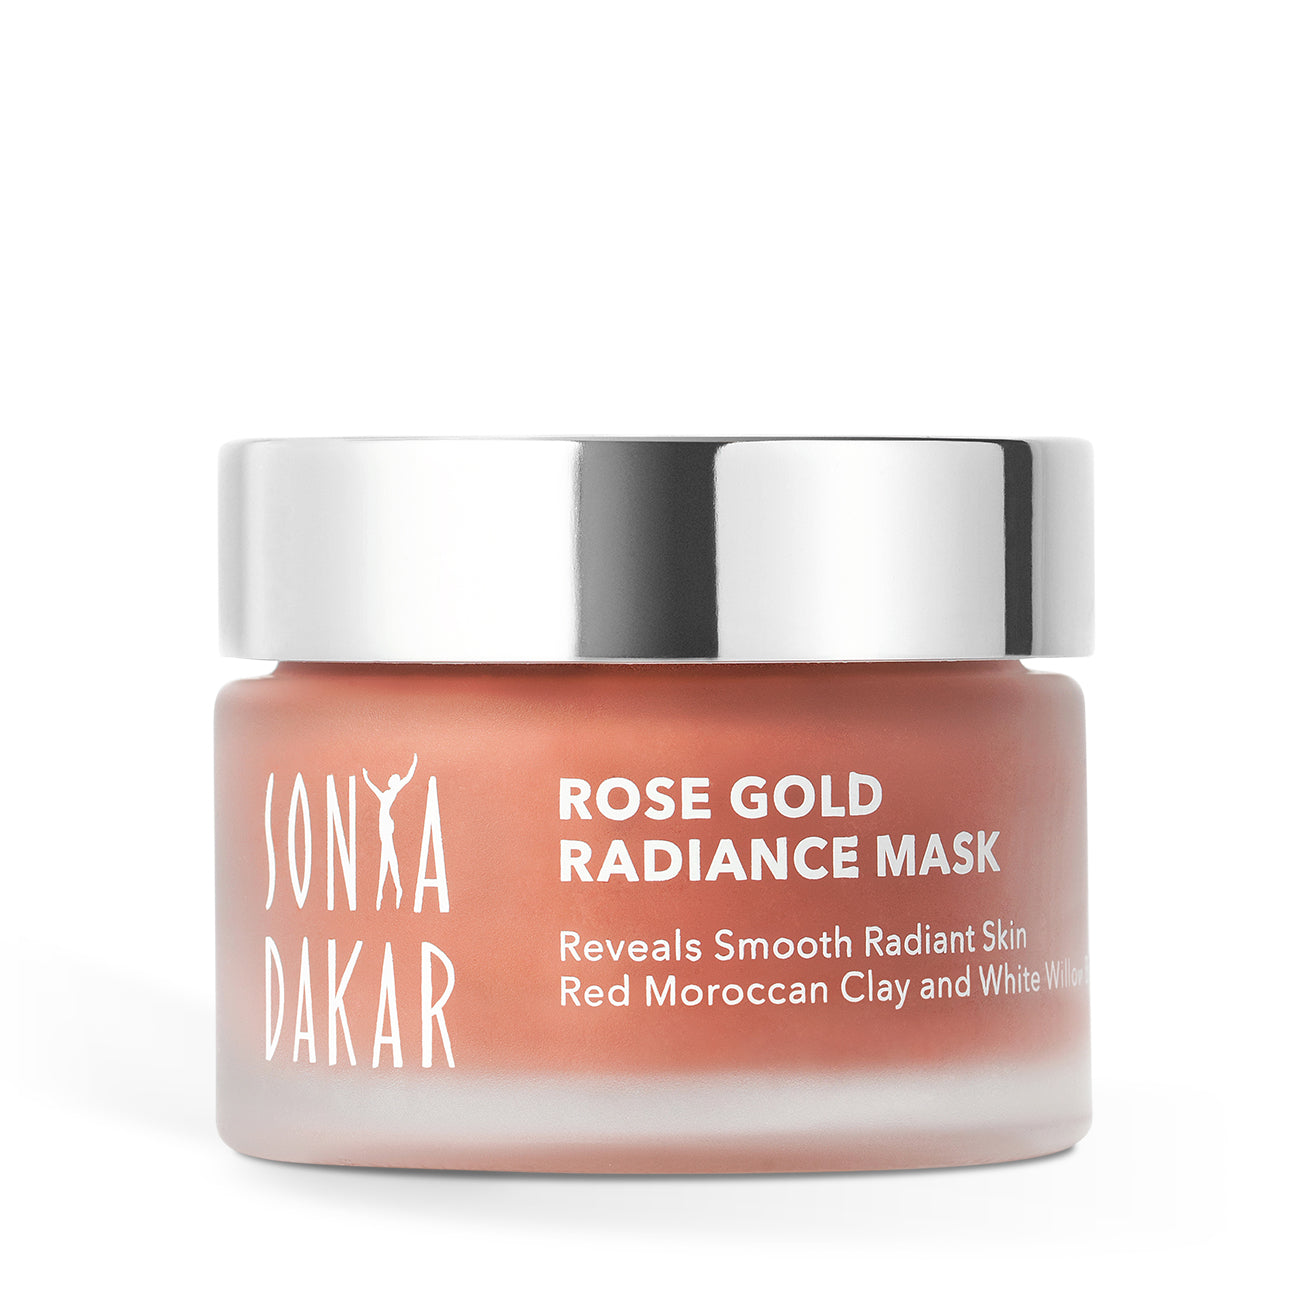 Pore Minimizer Mask - Sonya Dakar Rose Gold Radiance Mask – SONYA DAKAR